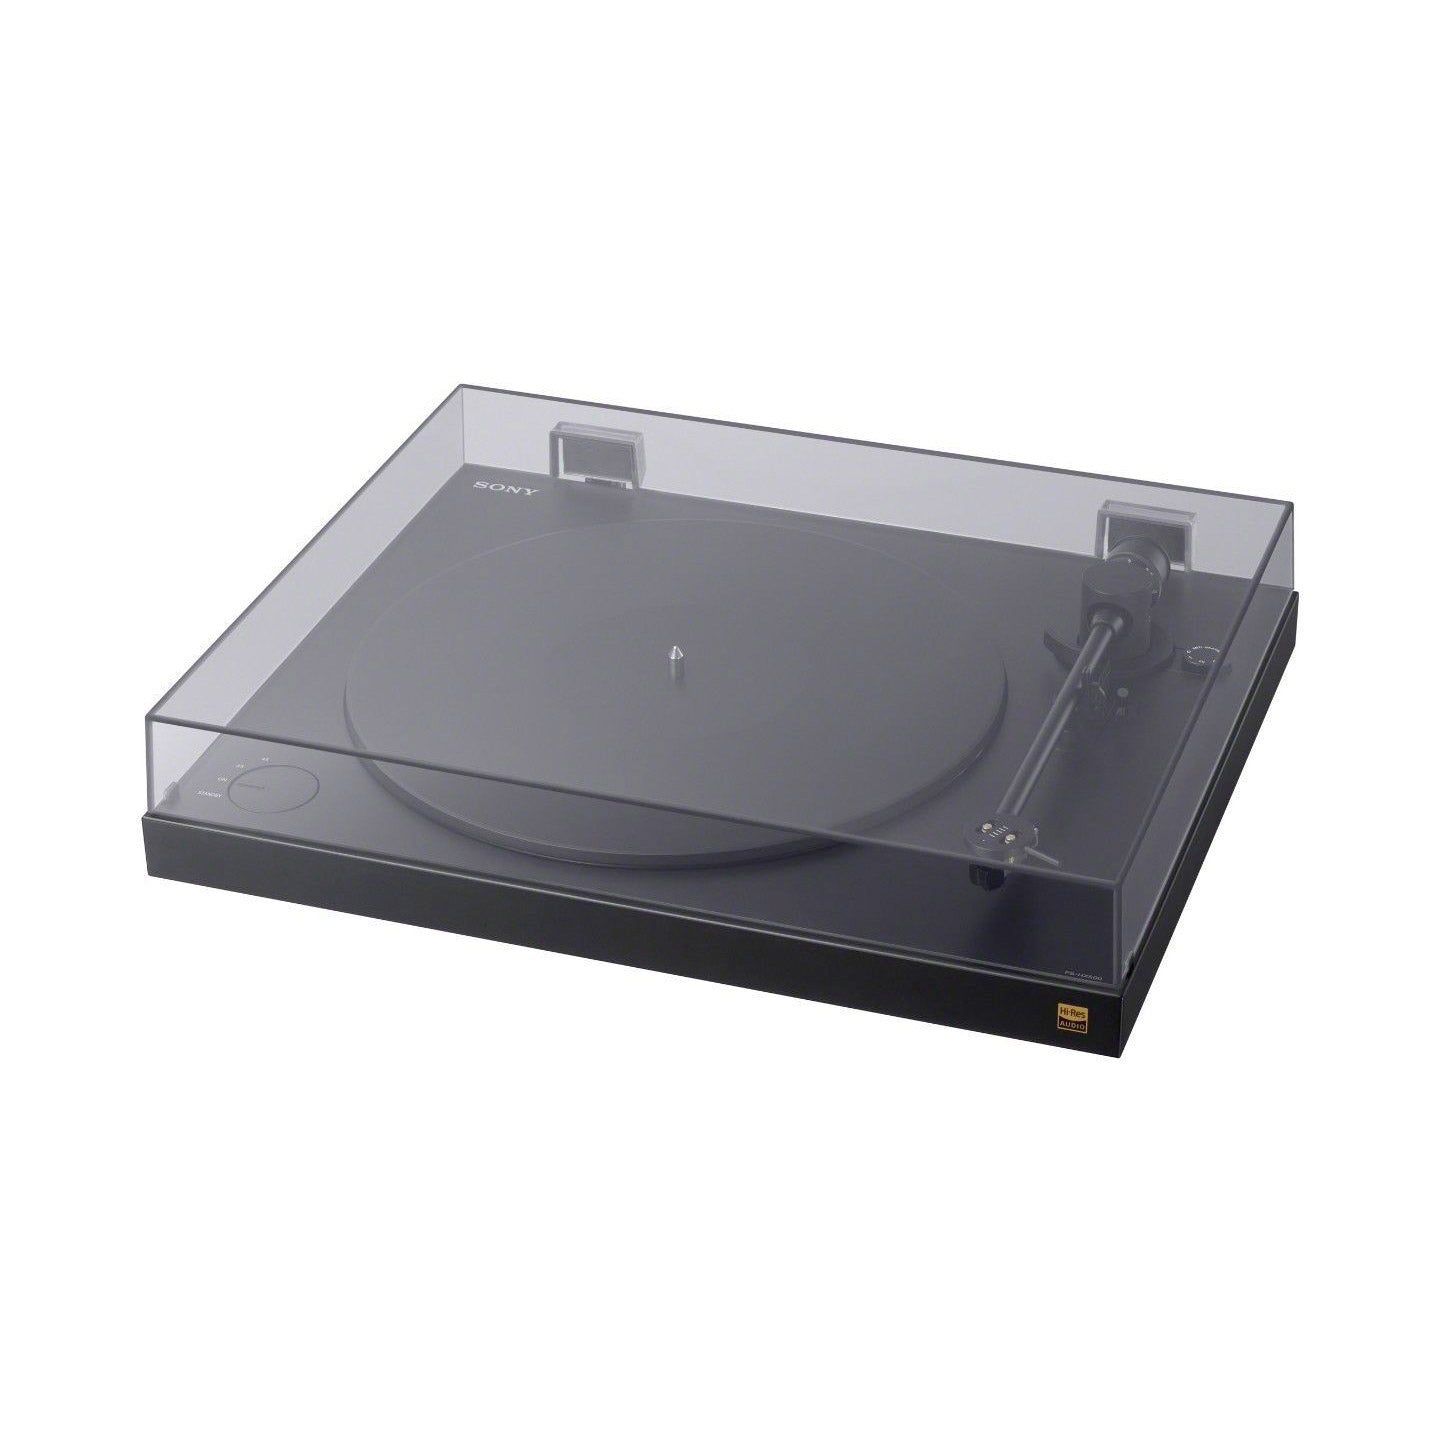 Sony PS-HX500 Hi-Res USB Turntable